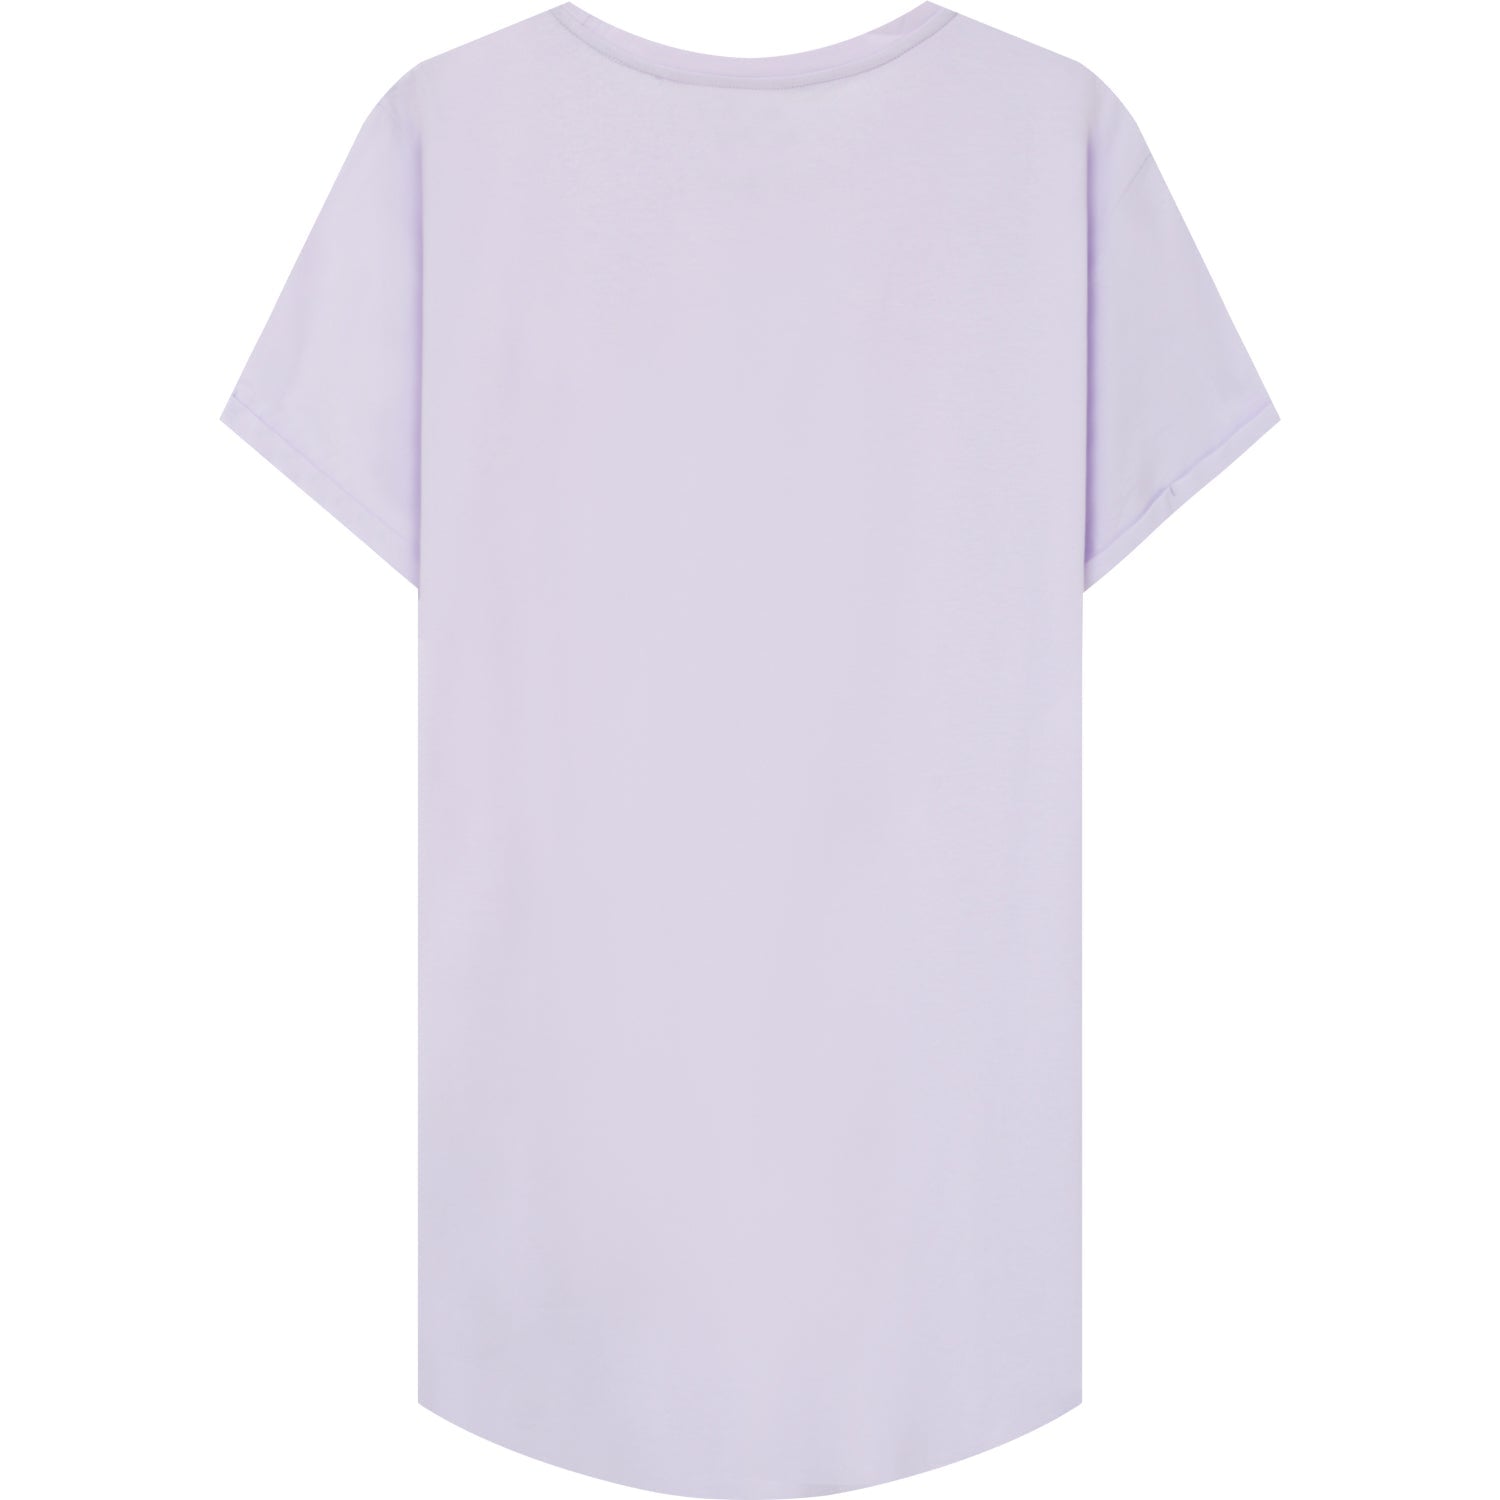 Sixth June - T-shirt bas arrondi long Violet clair